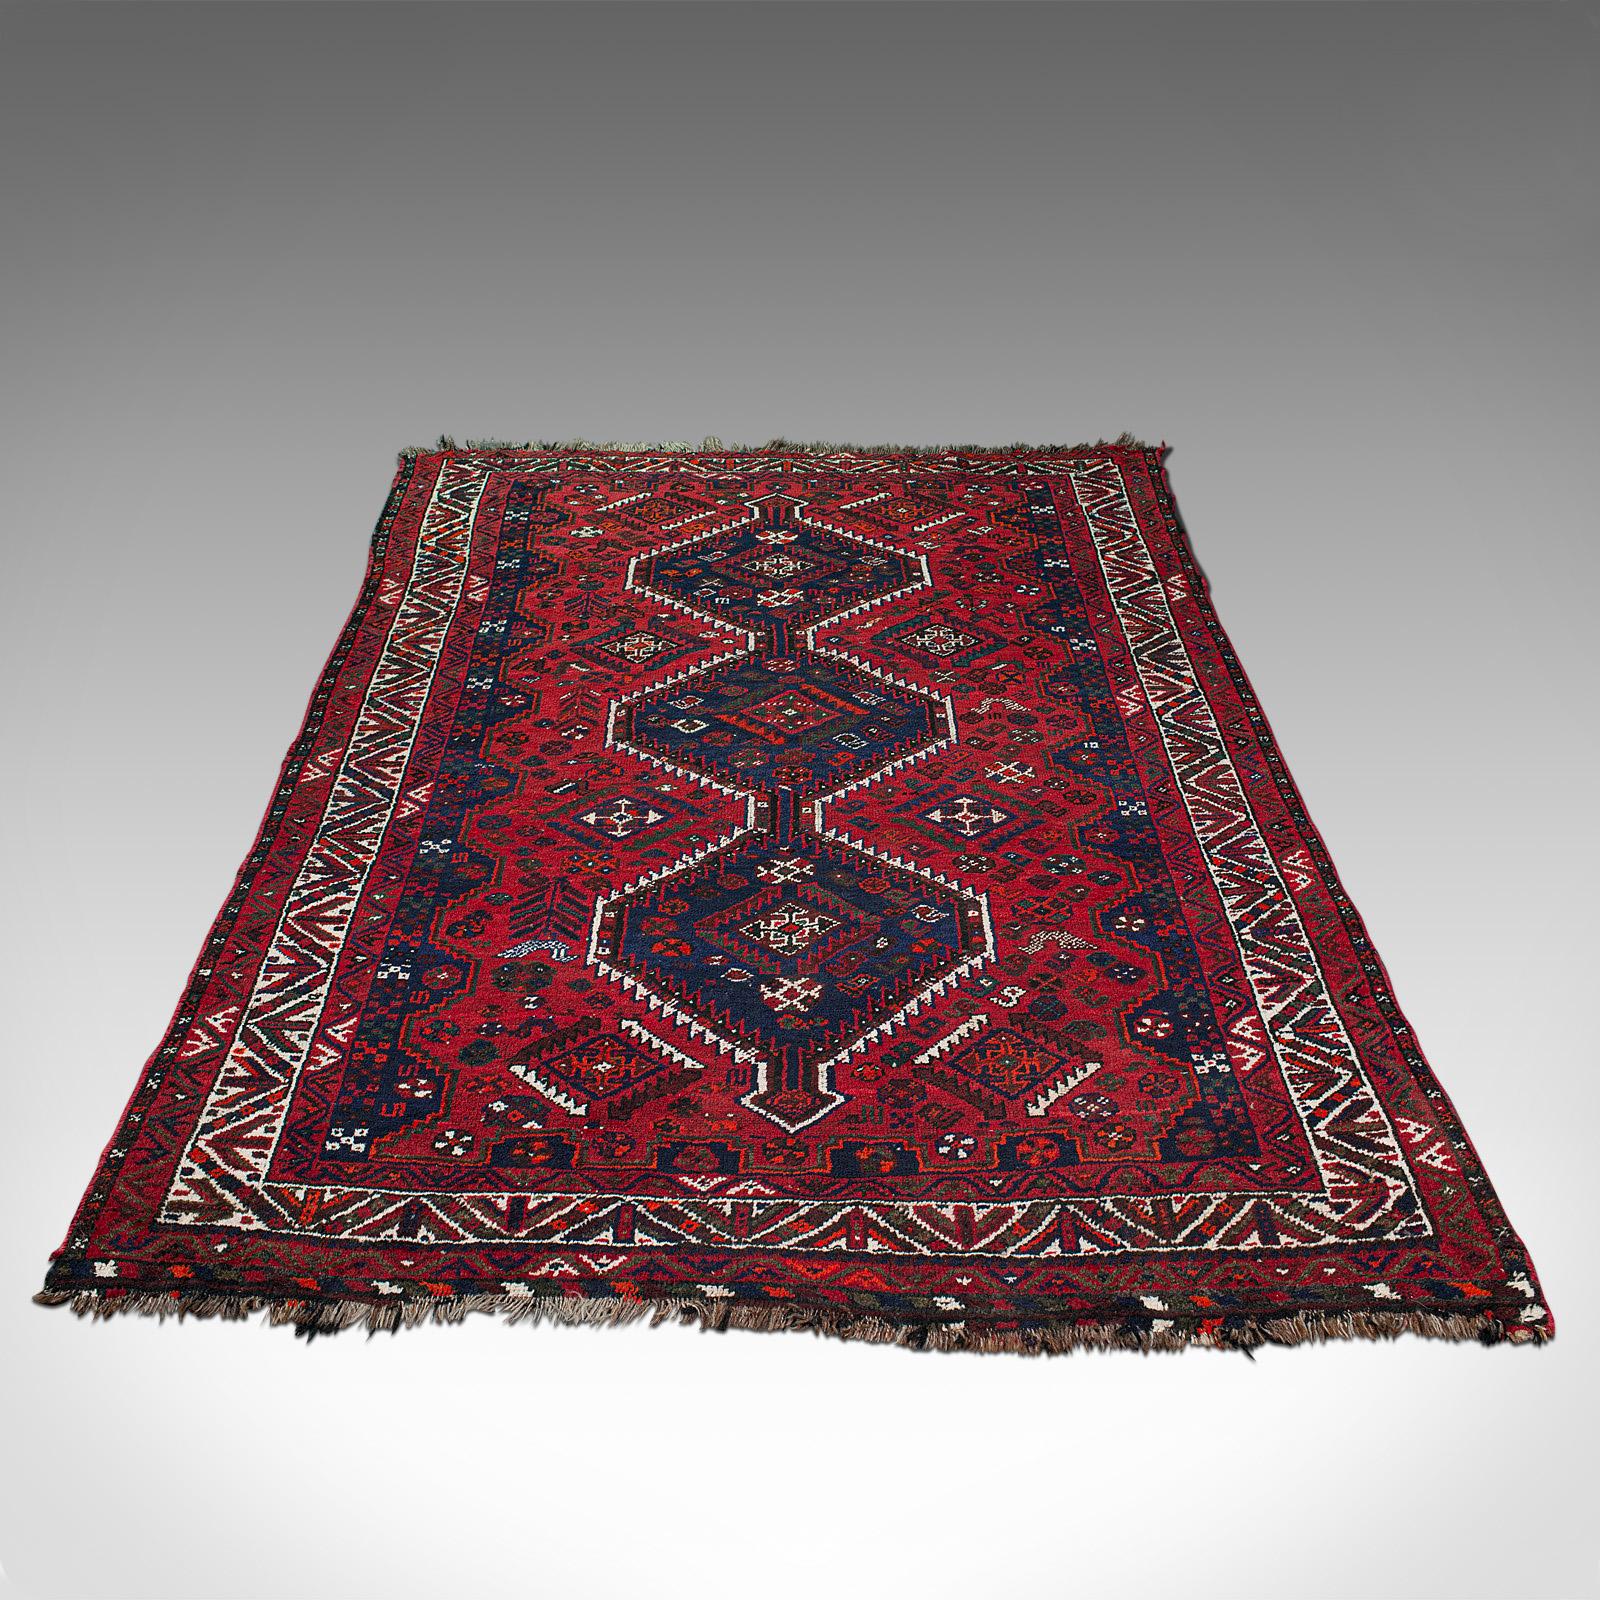 19th Century Antique Turkoman Carpet, Caucasian, Hand Woven, Lounge, Hallway, Rug, Circa 1900 For Sale